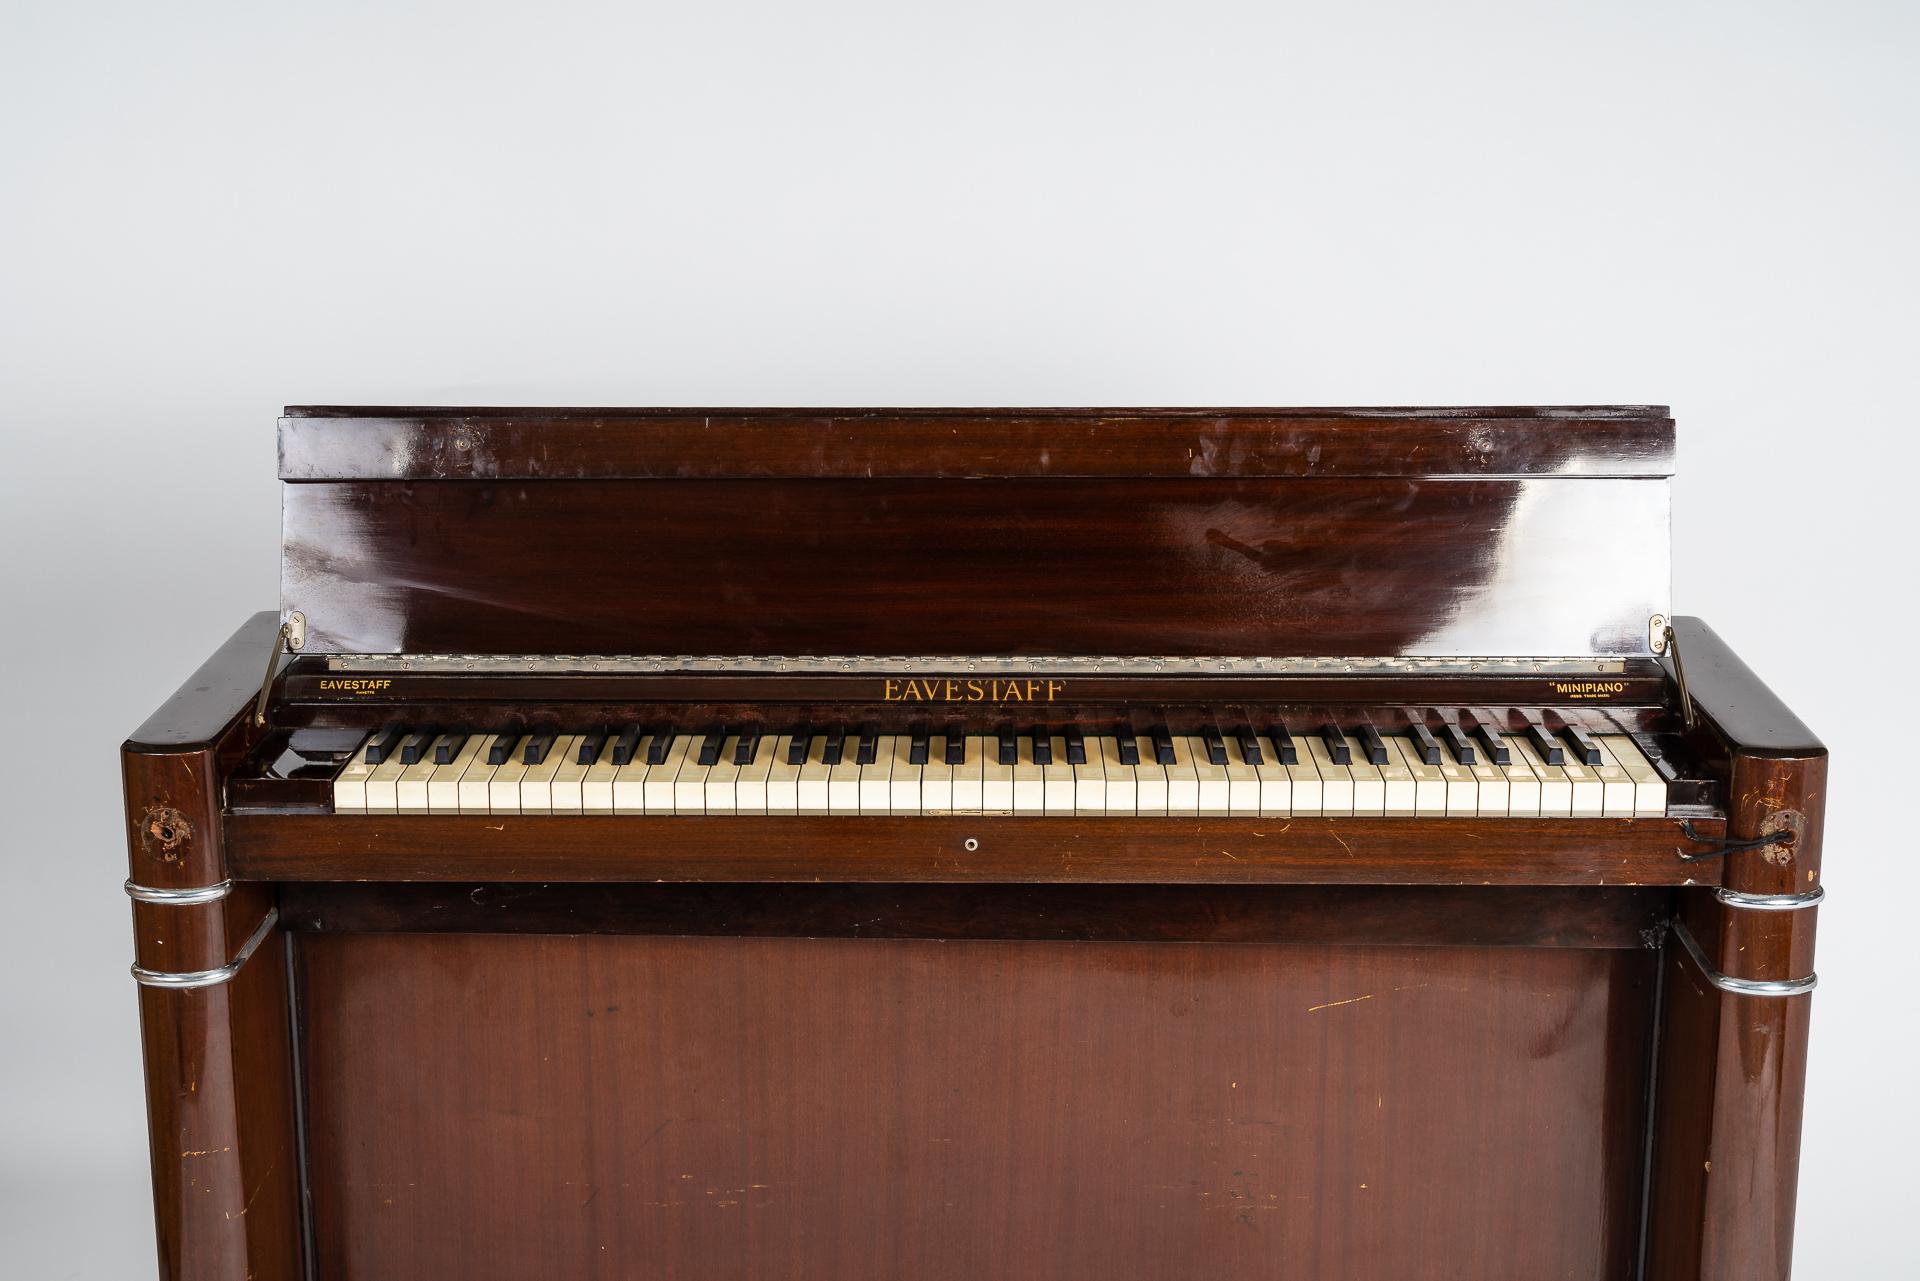 English Art Deco Piano from Eavestaff